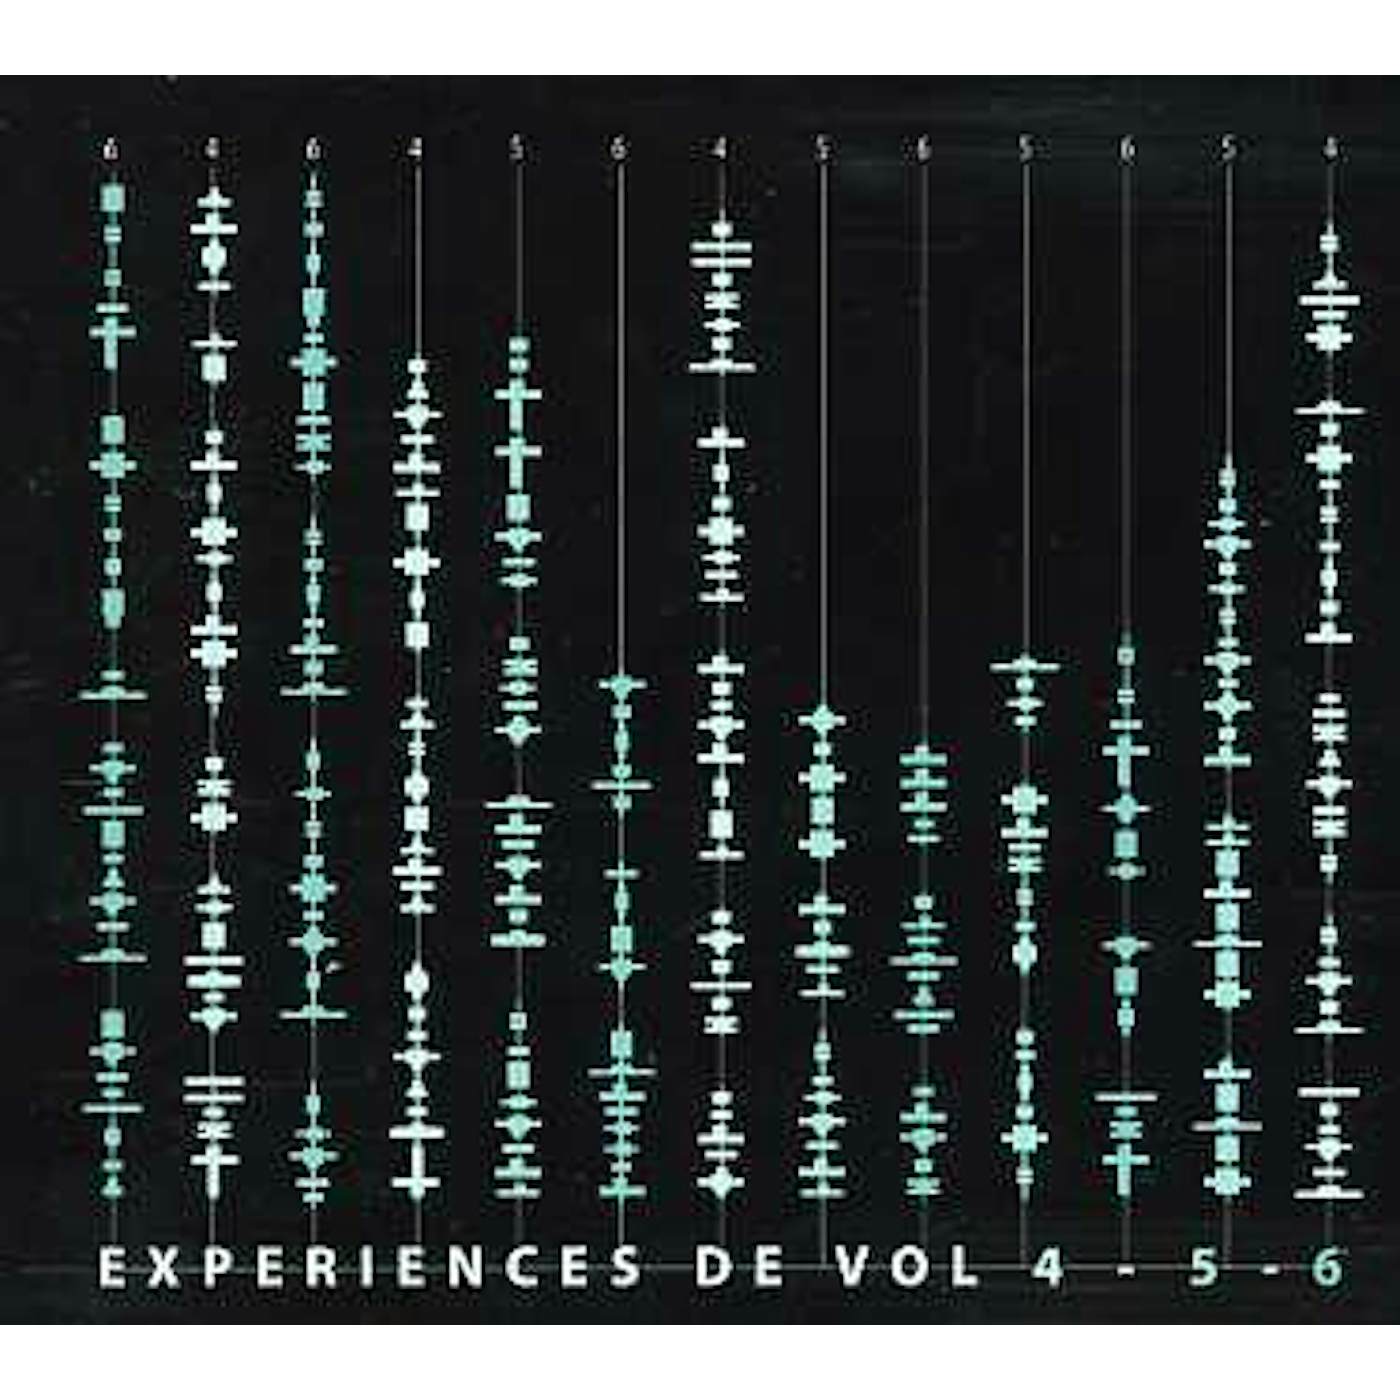 Art Zoyd EXPERIENCES DE 4-5-6 CD